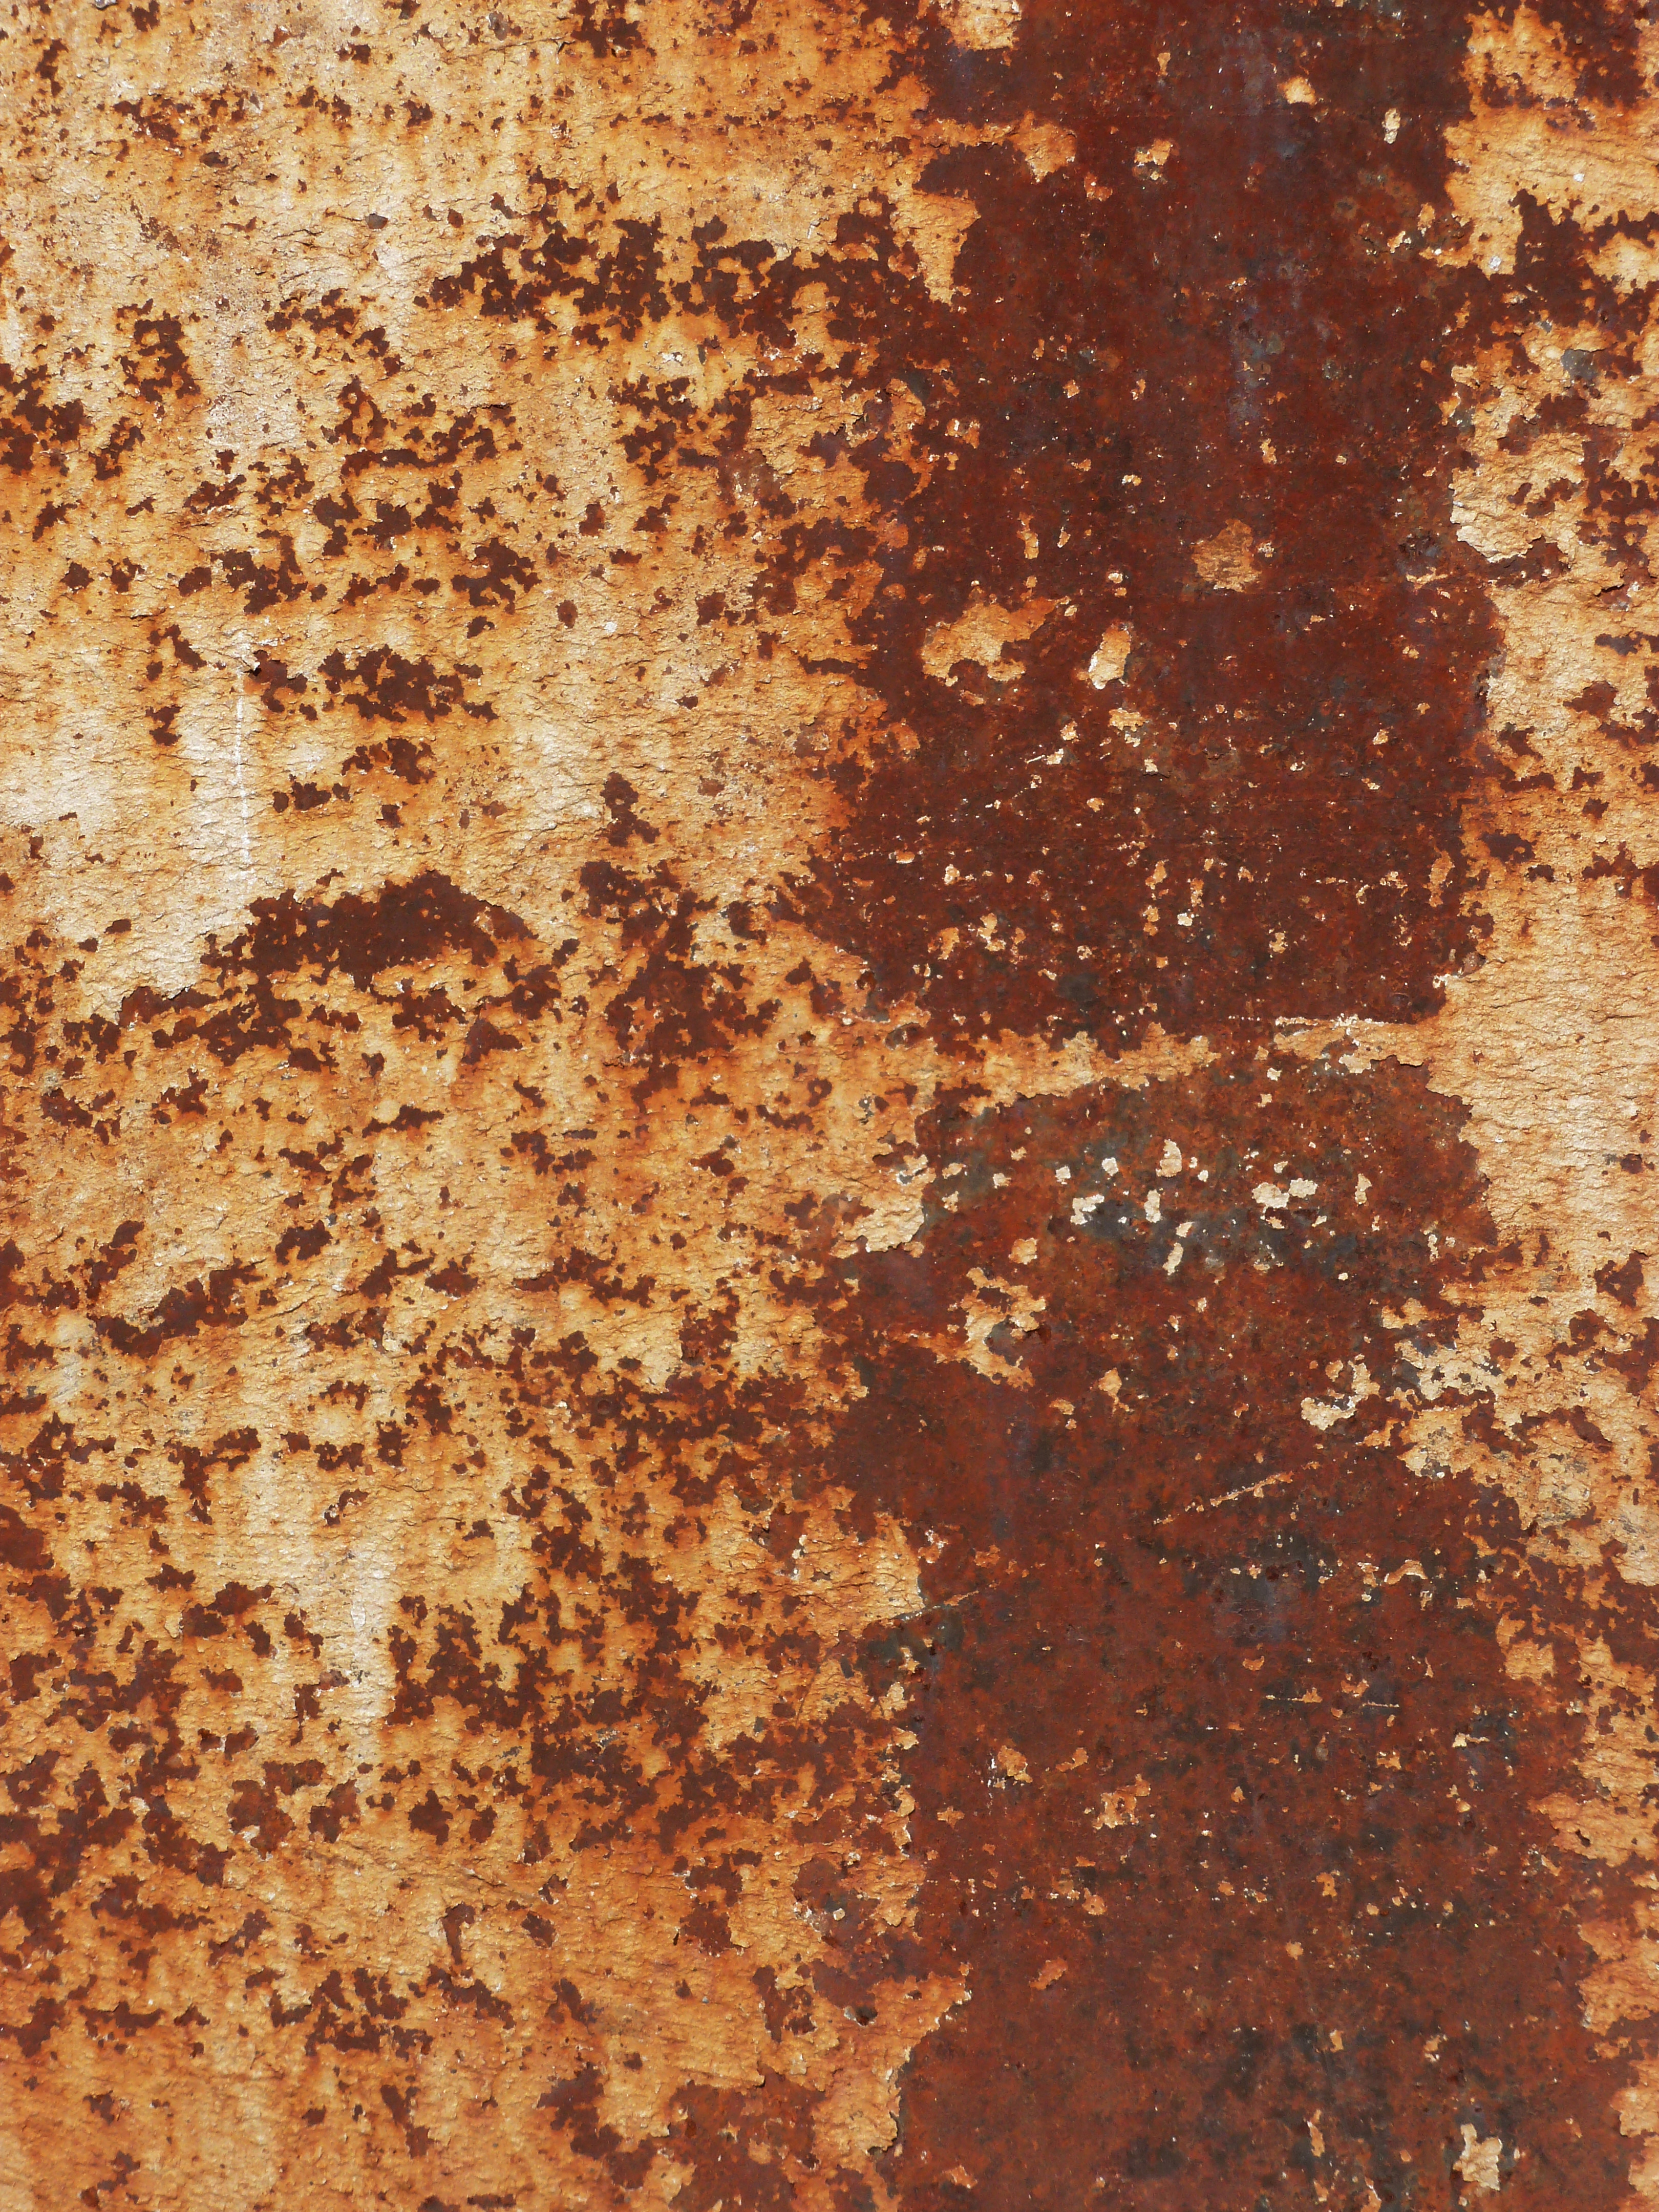 Rusted metal photo